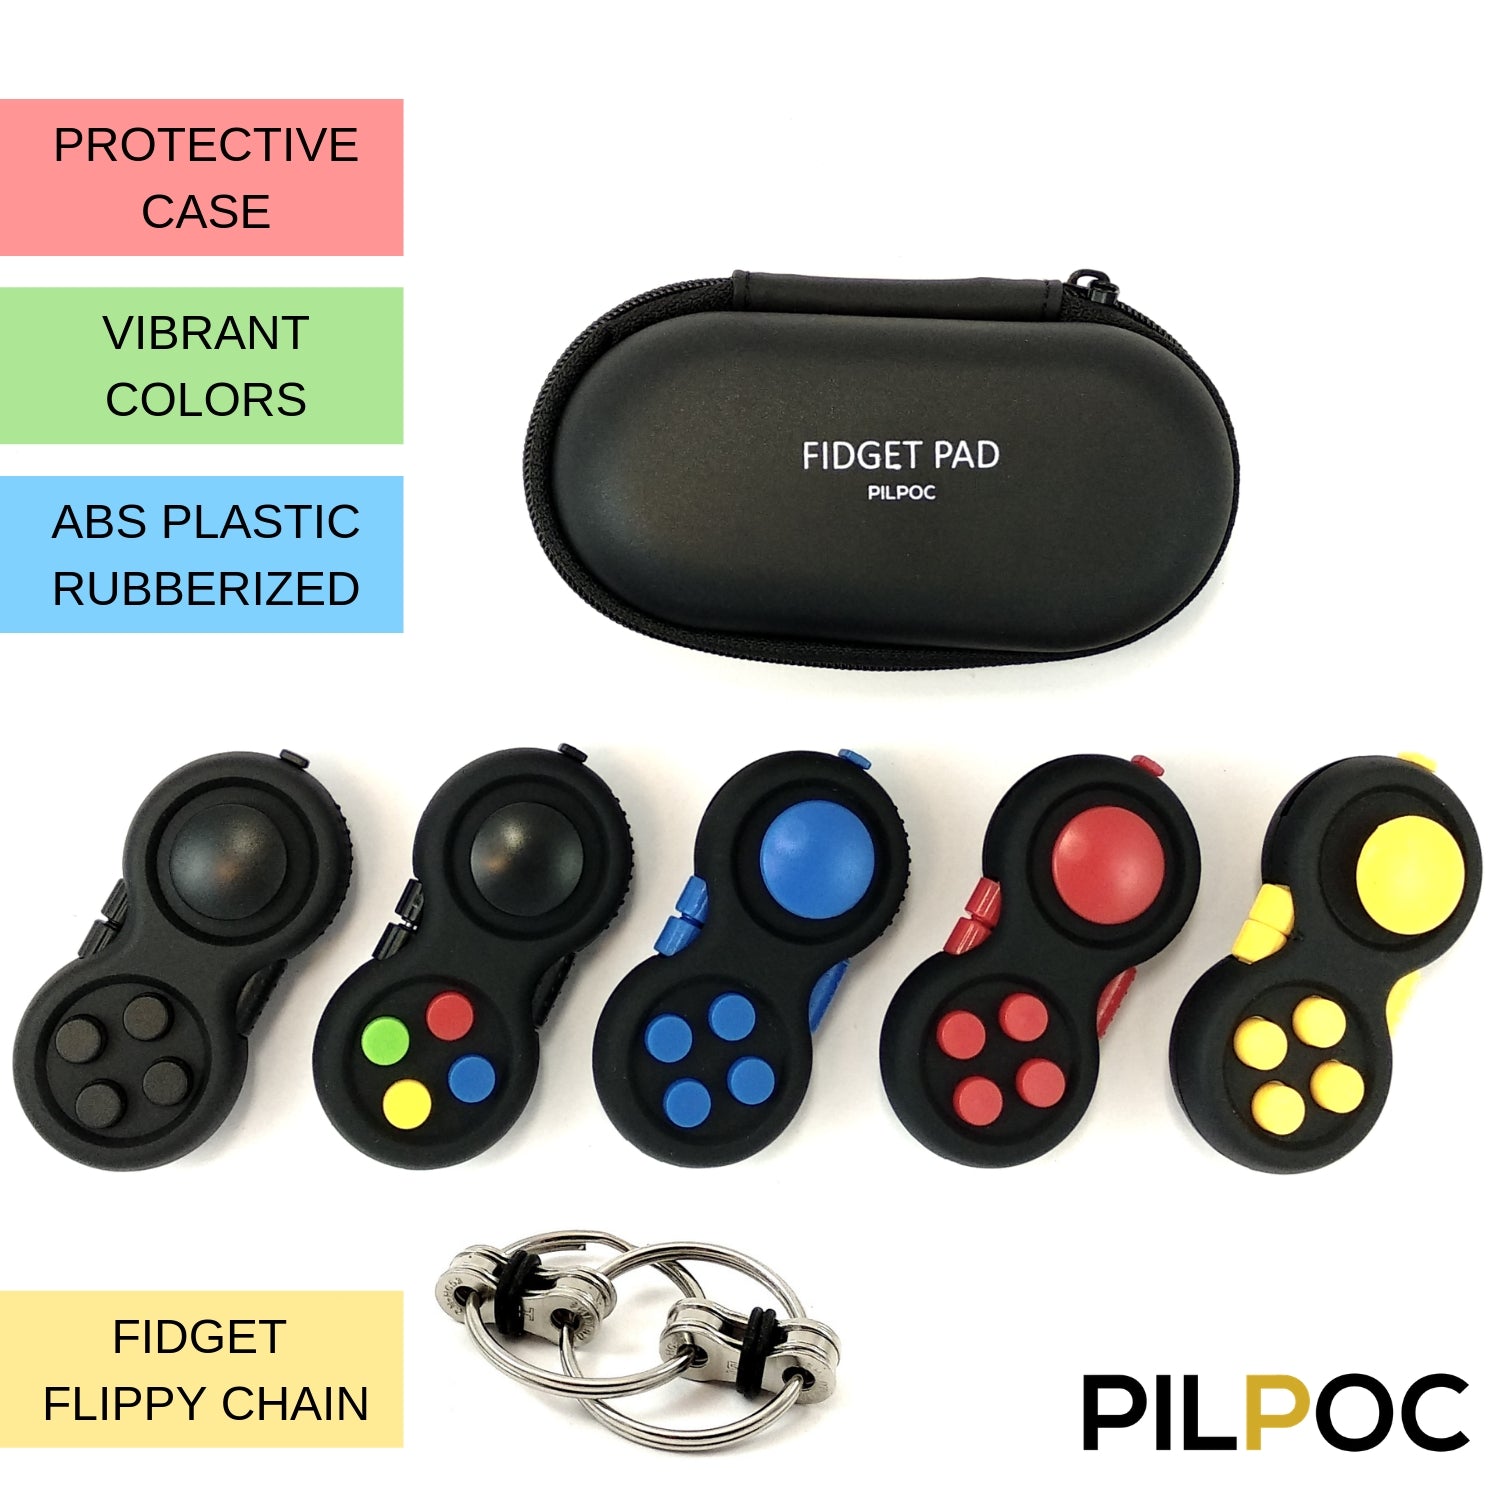 Fidget controller – Pilpoc